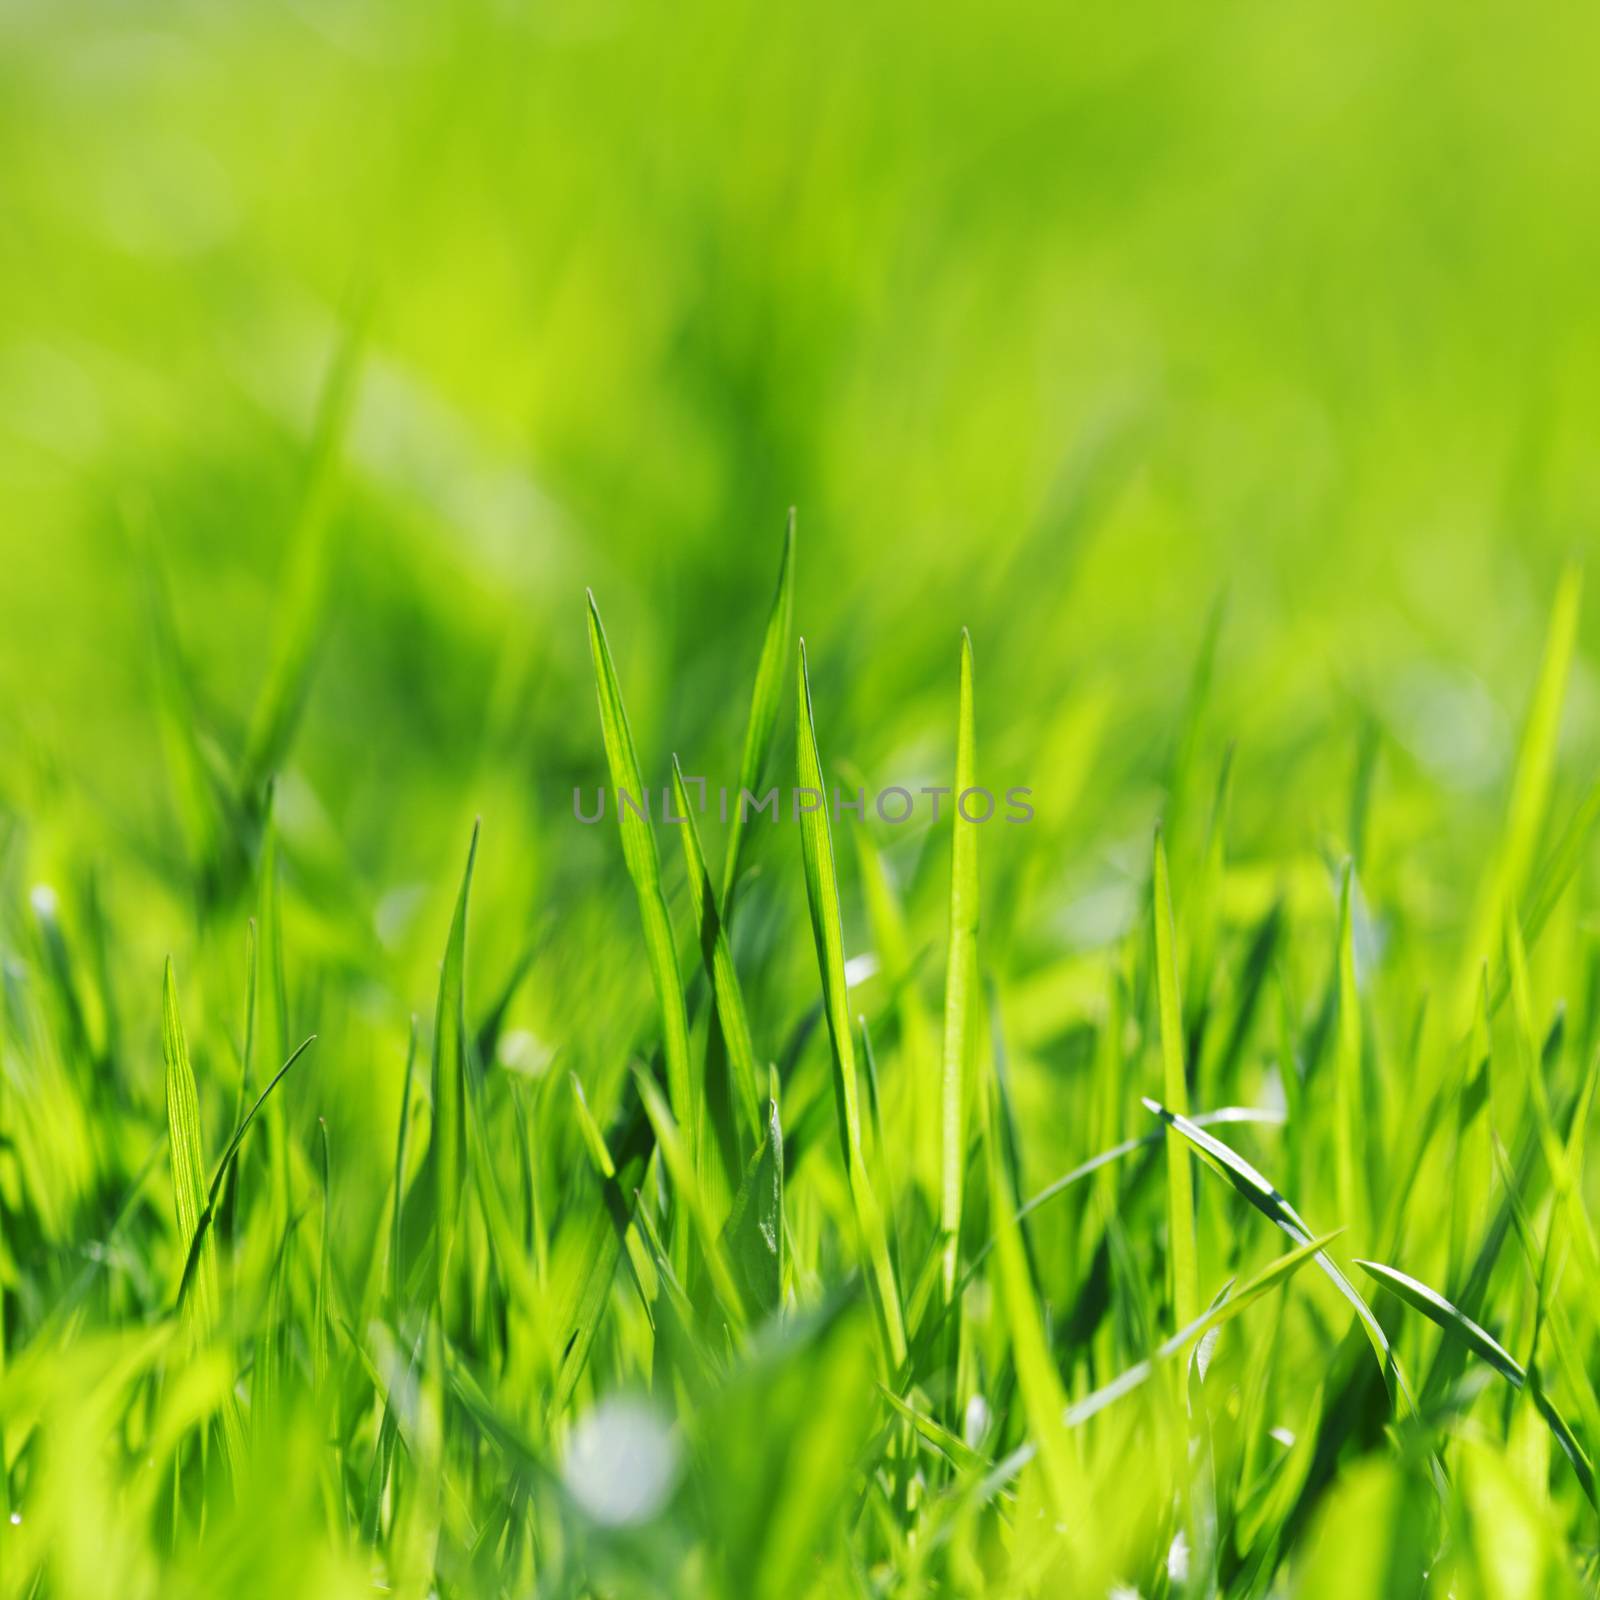 Vibrant green spring grass close-up